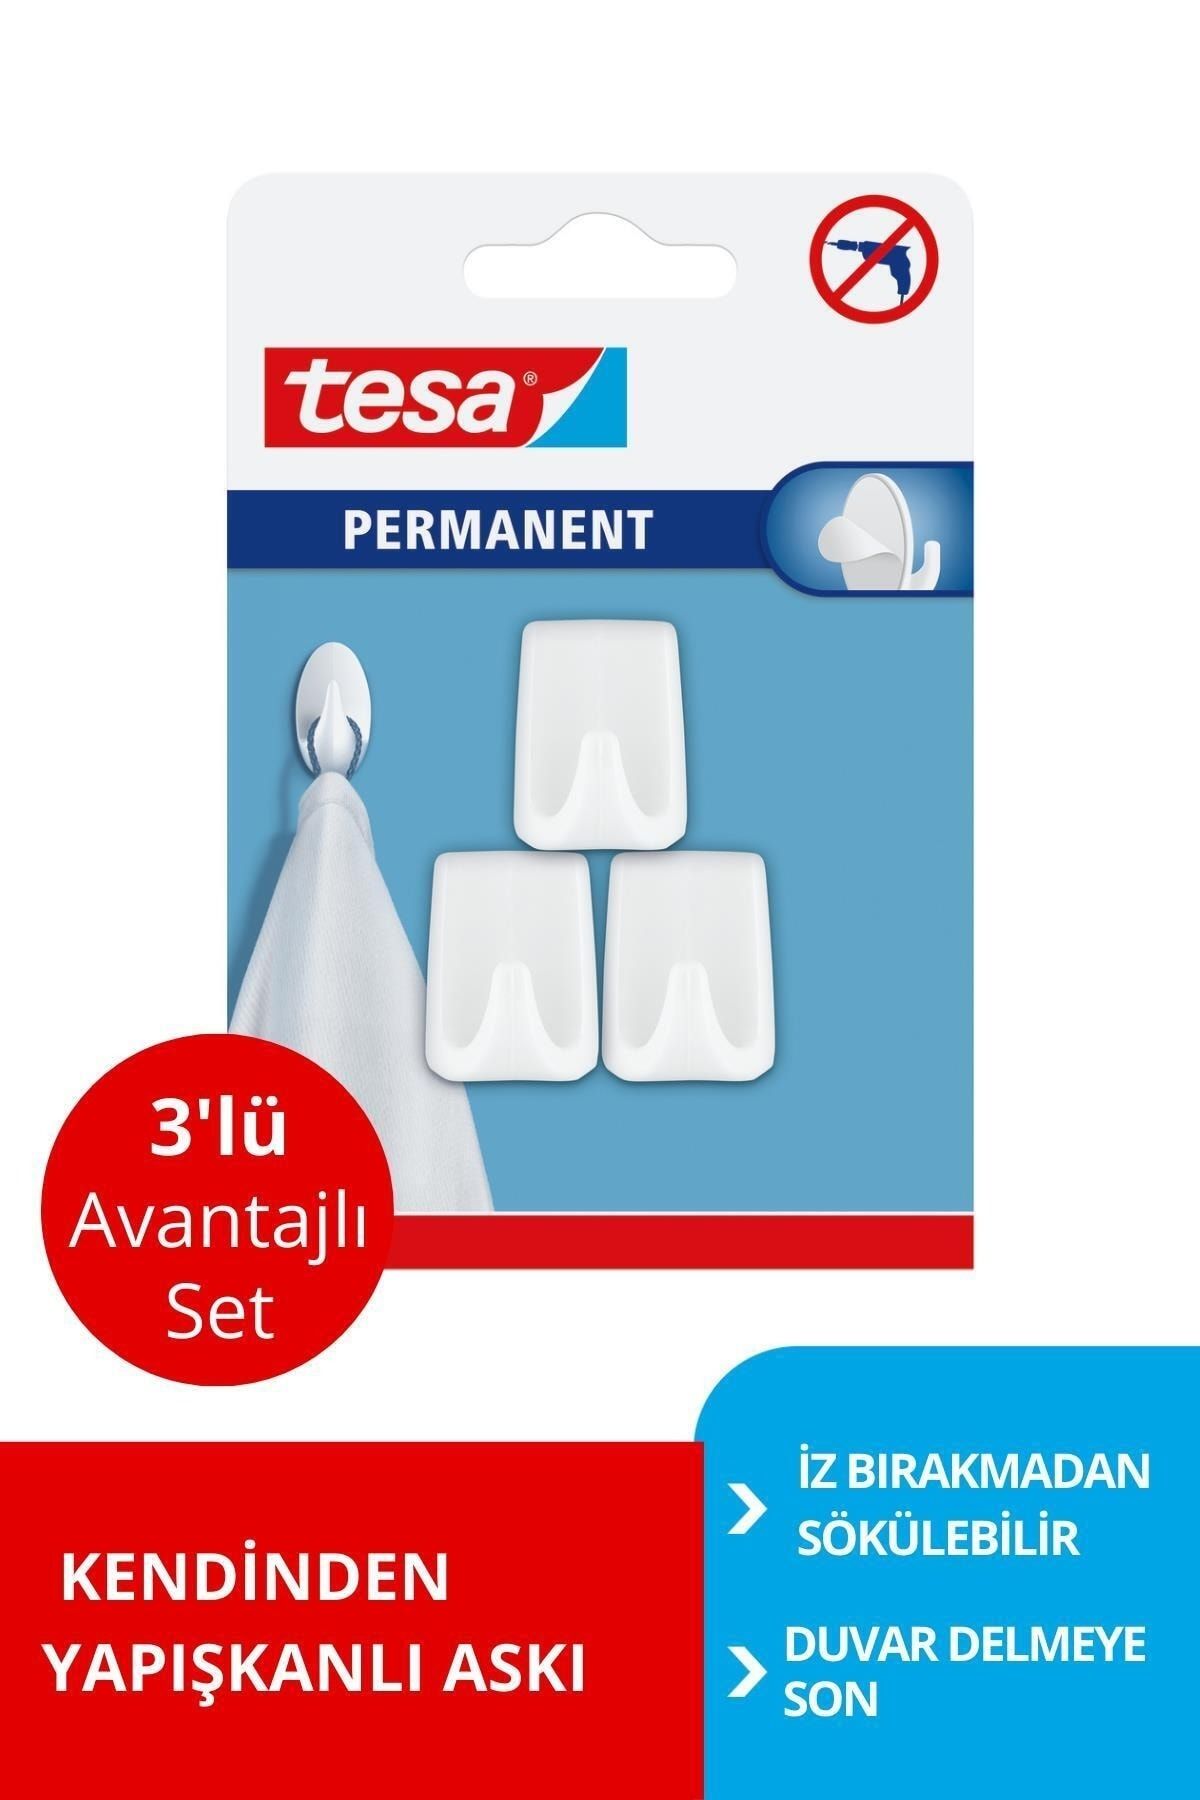 Tesa PERMANENT Askı Plastik Küçük Dikd. Beyaz 3 adet X 3 Paket (Toplam 6 askı)